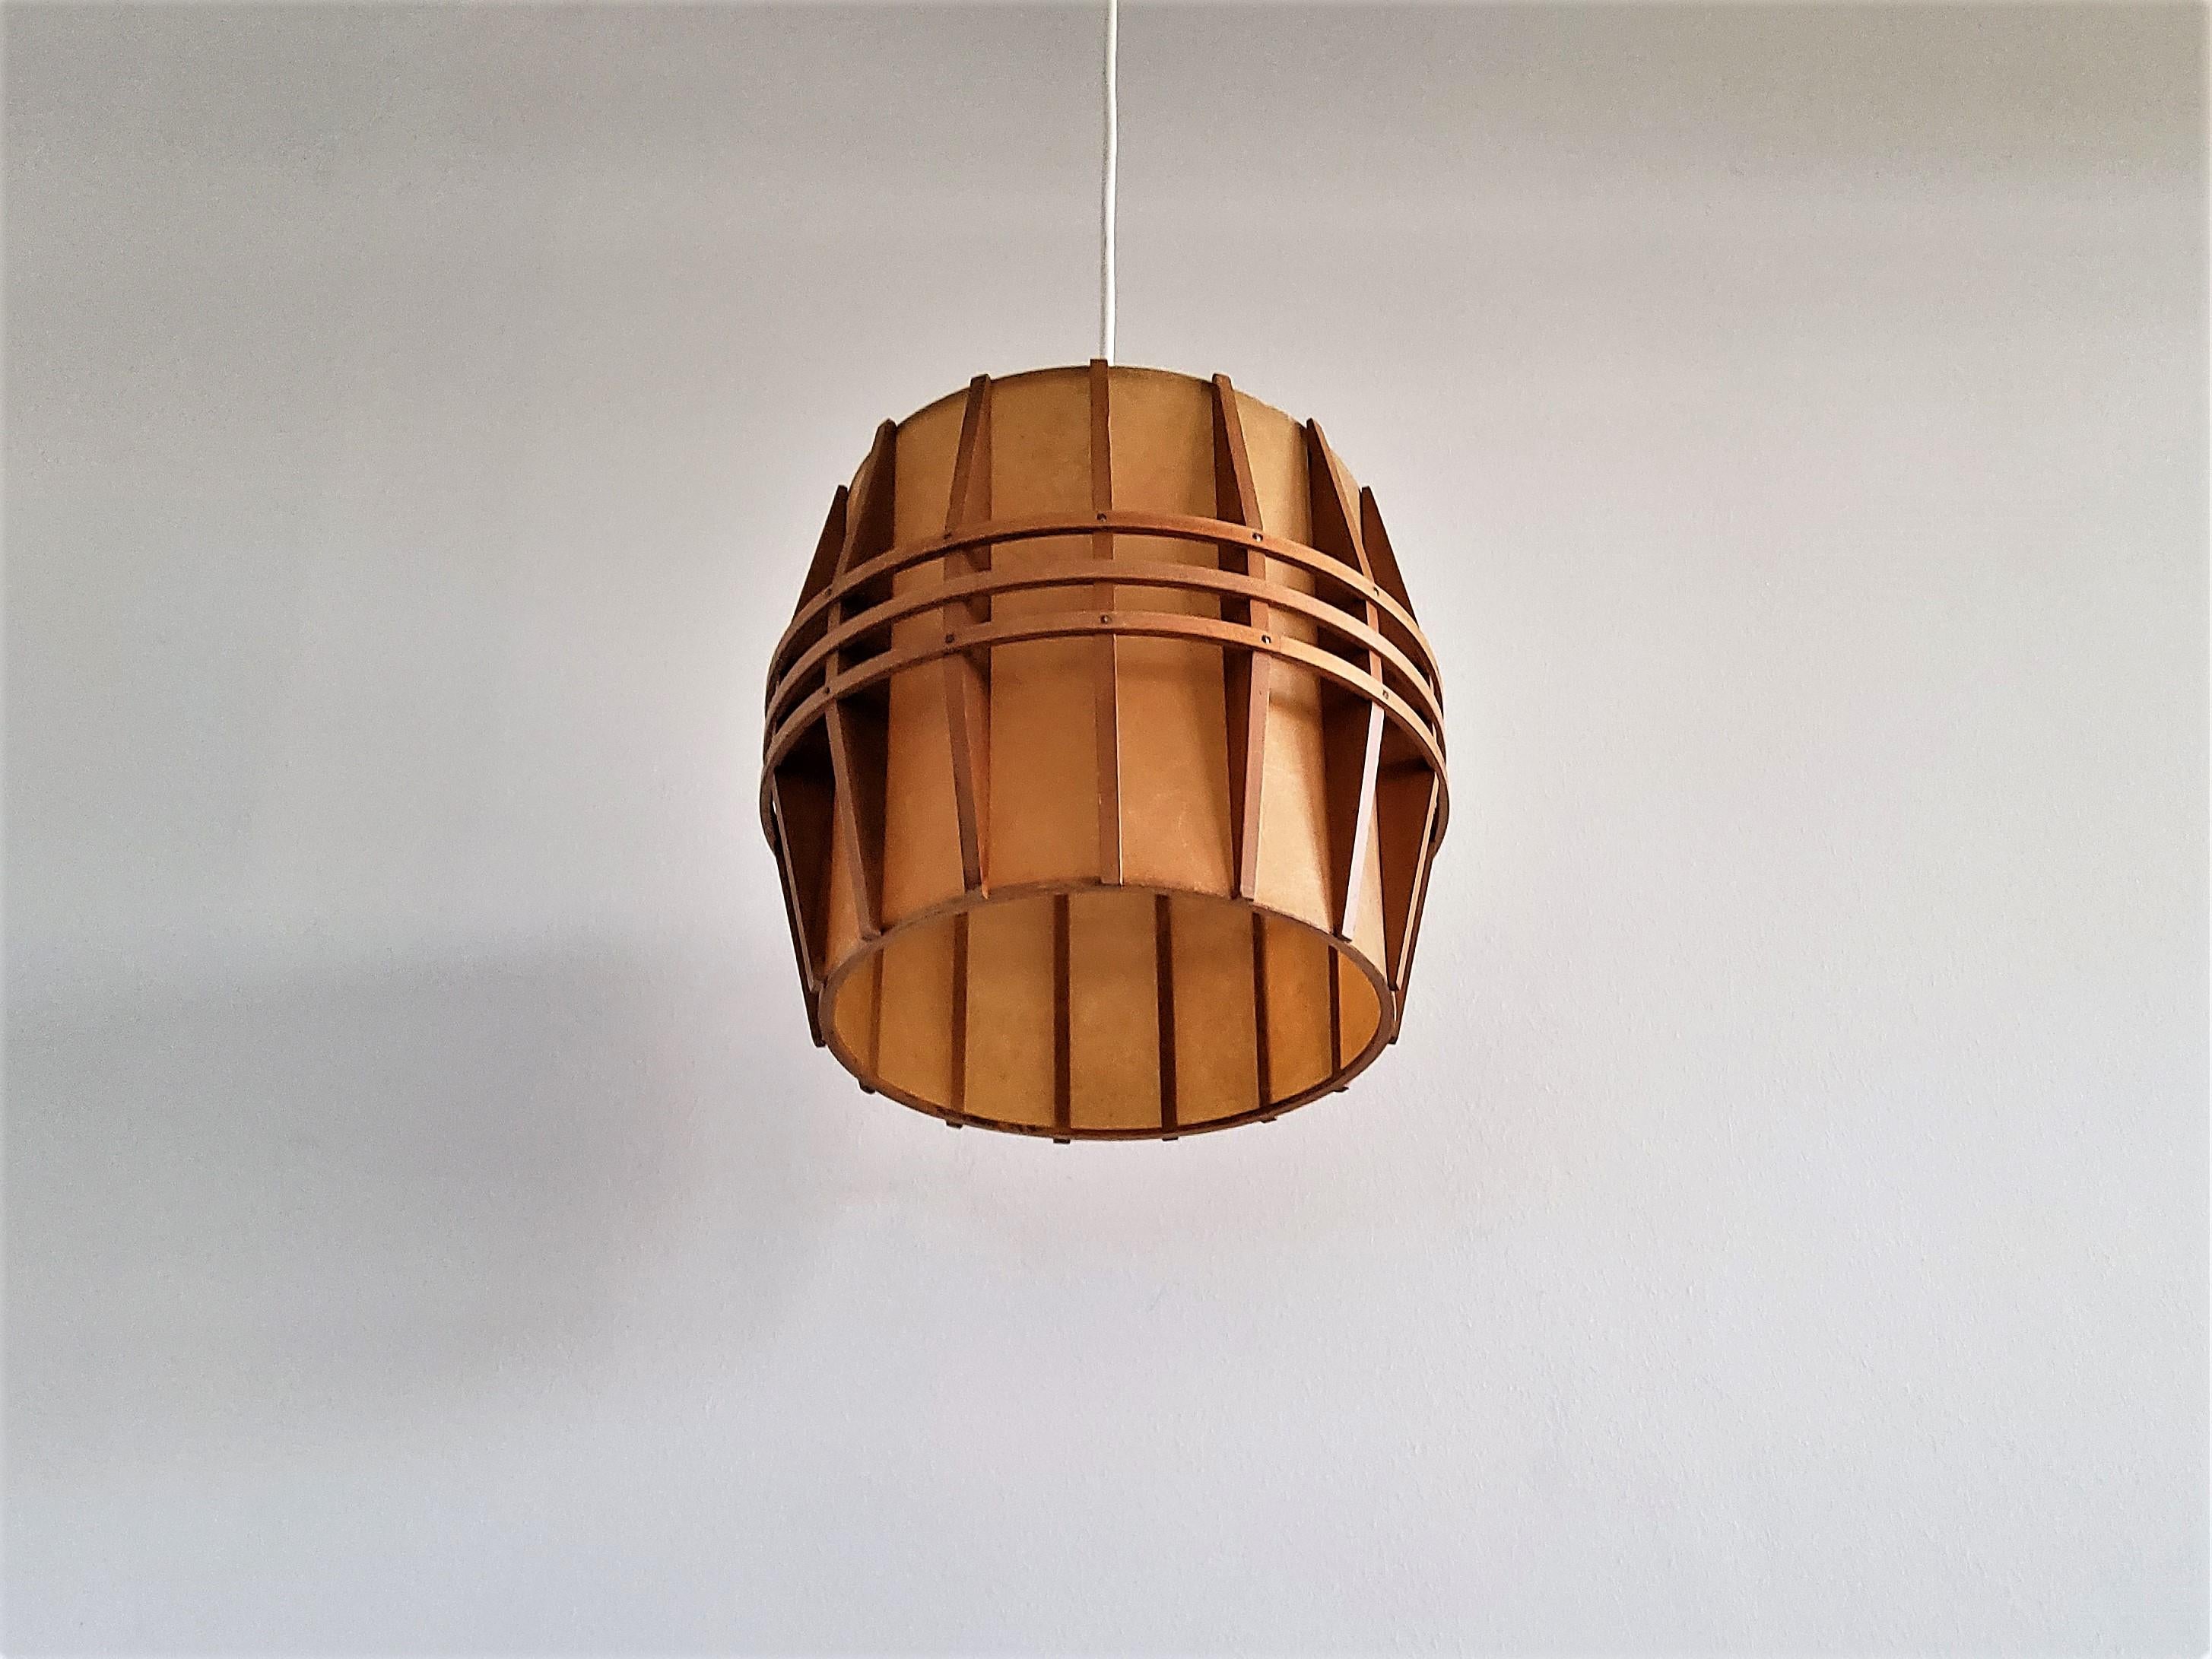 Danish Vintage Pendant Lamp with Wooden Details, 1960's